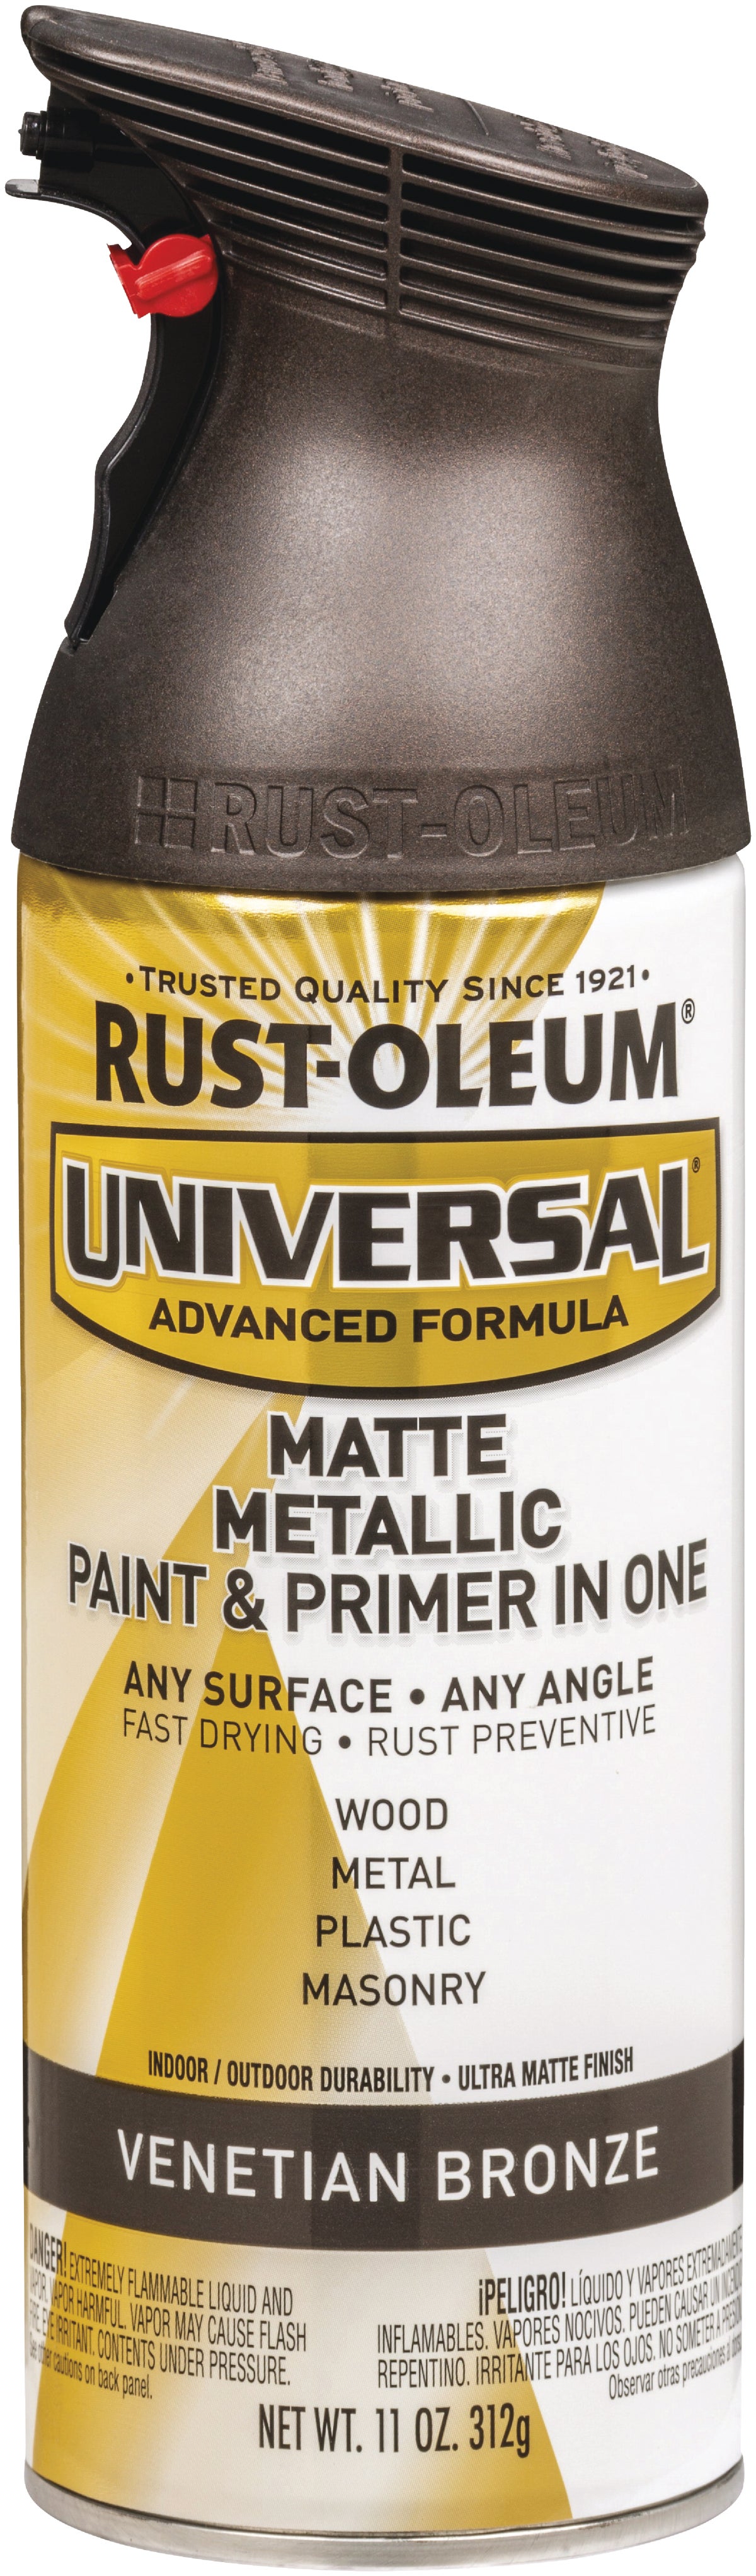 Rust-Oleum Universal Metallic Spray Paint And Primer in One in Satin Bronze,  340 G Aerosol